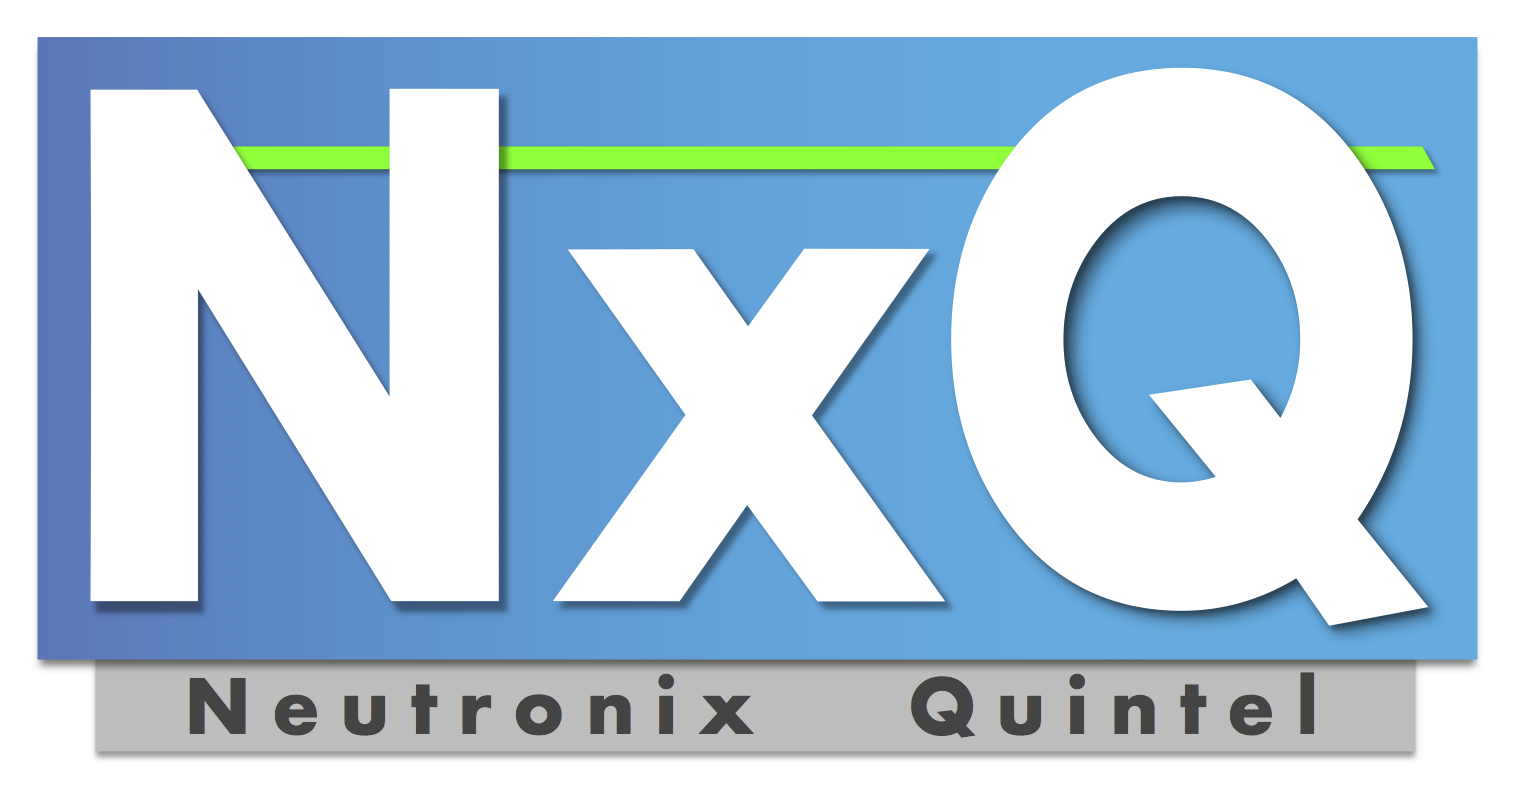 Neutronix-Quintel